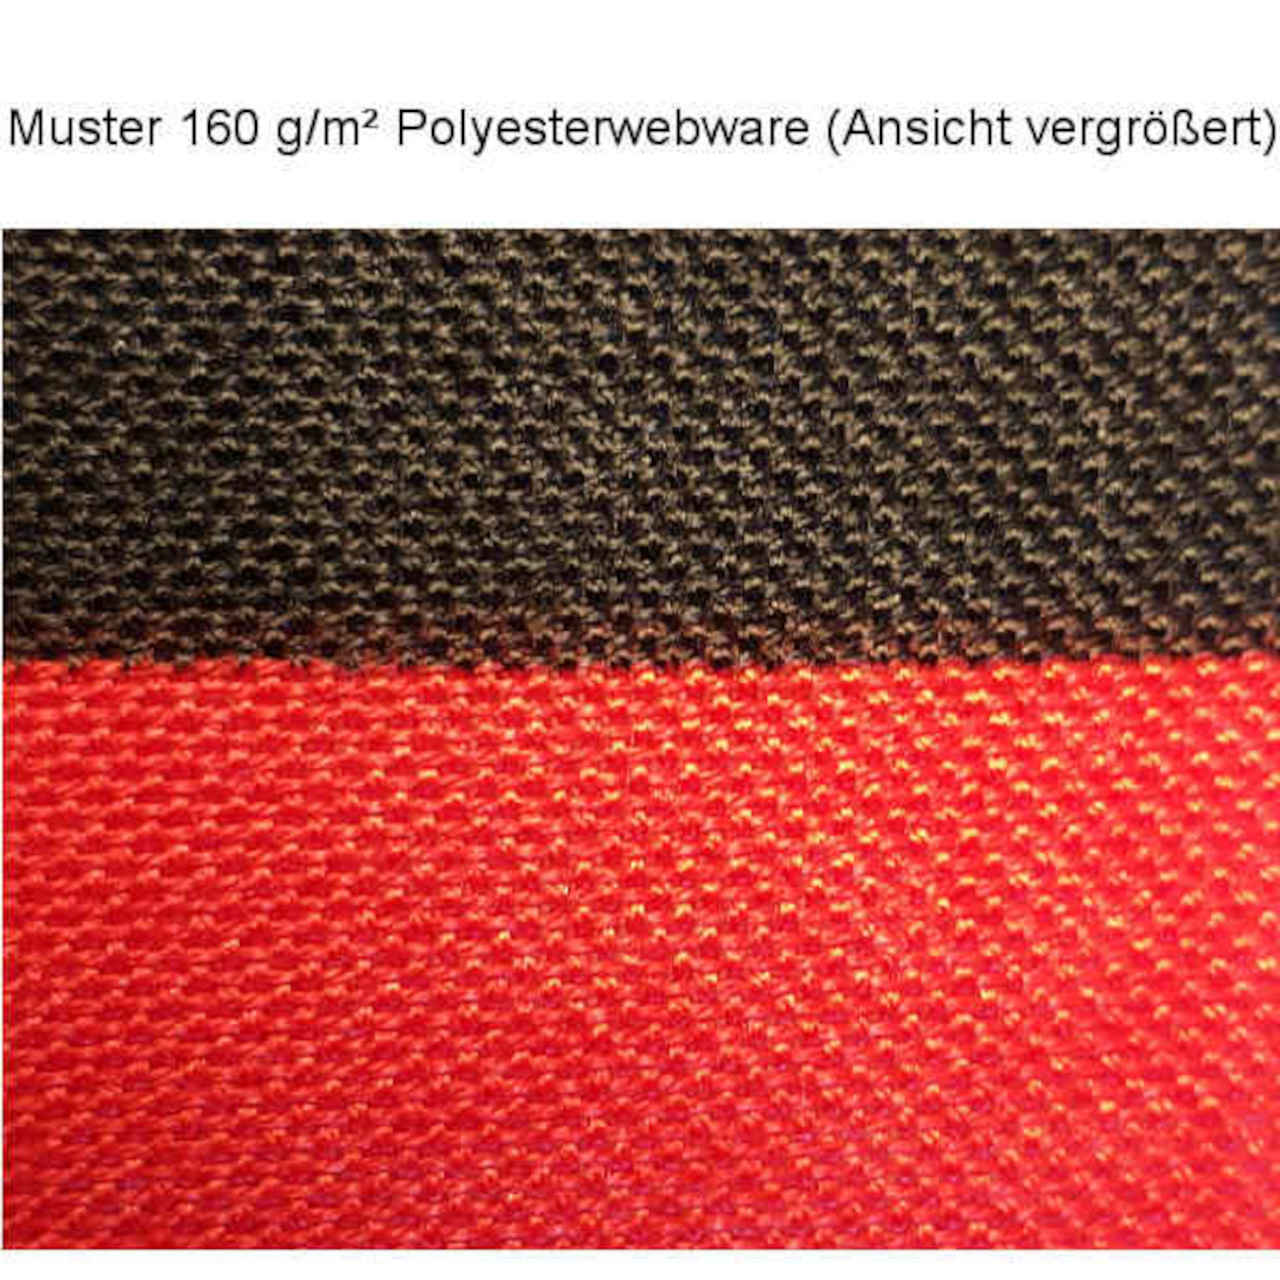 Flaggenstoffmuster aus Polyesterwebware 160 g/m²